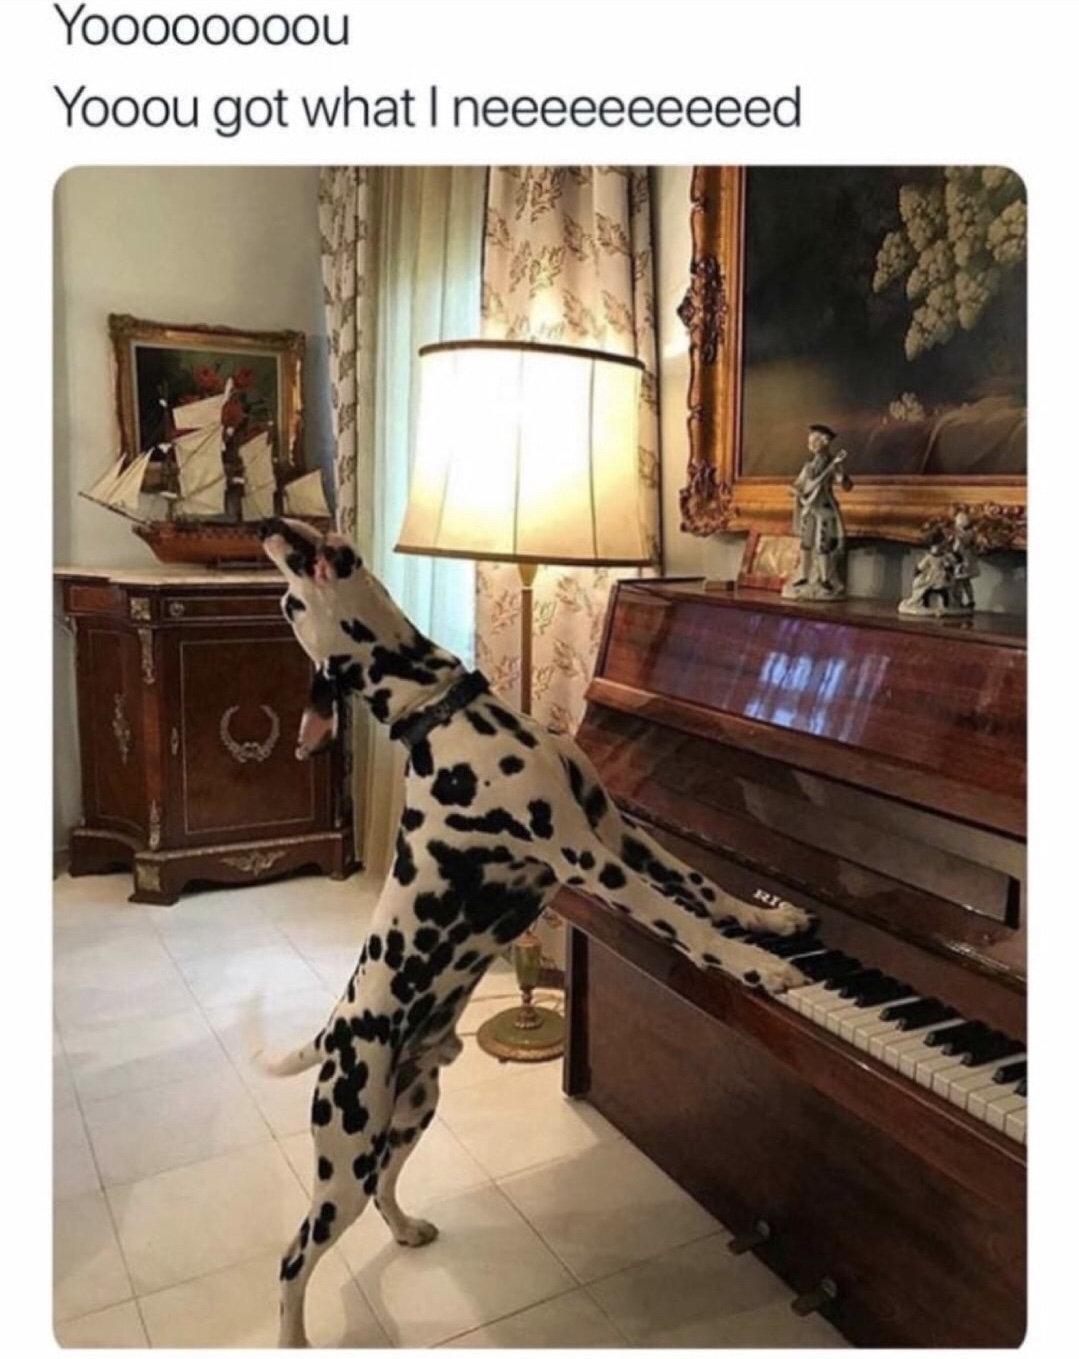 dank you got what i need dog piano - Yoooooooou Yooou got what I neeeeeeeeeed